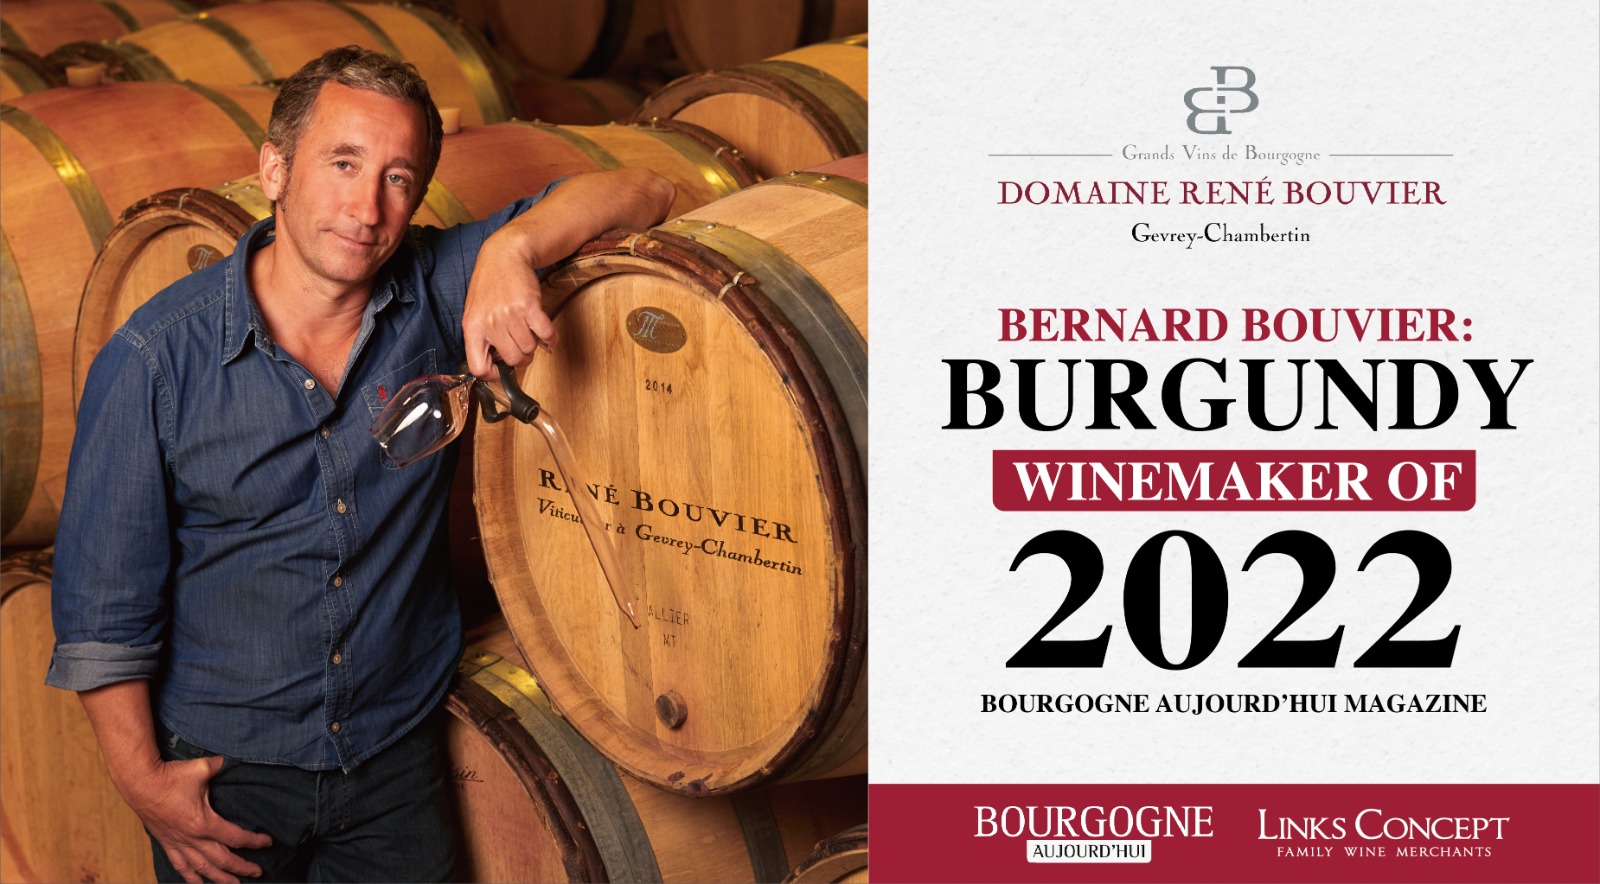 恭喜Rene Bouvier莊主Bernard Bouvier獲得Bourgogne Aujourd'hui Magazine評選的“Burgundy Winemaker of 2022”稱號！